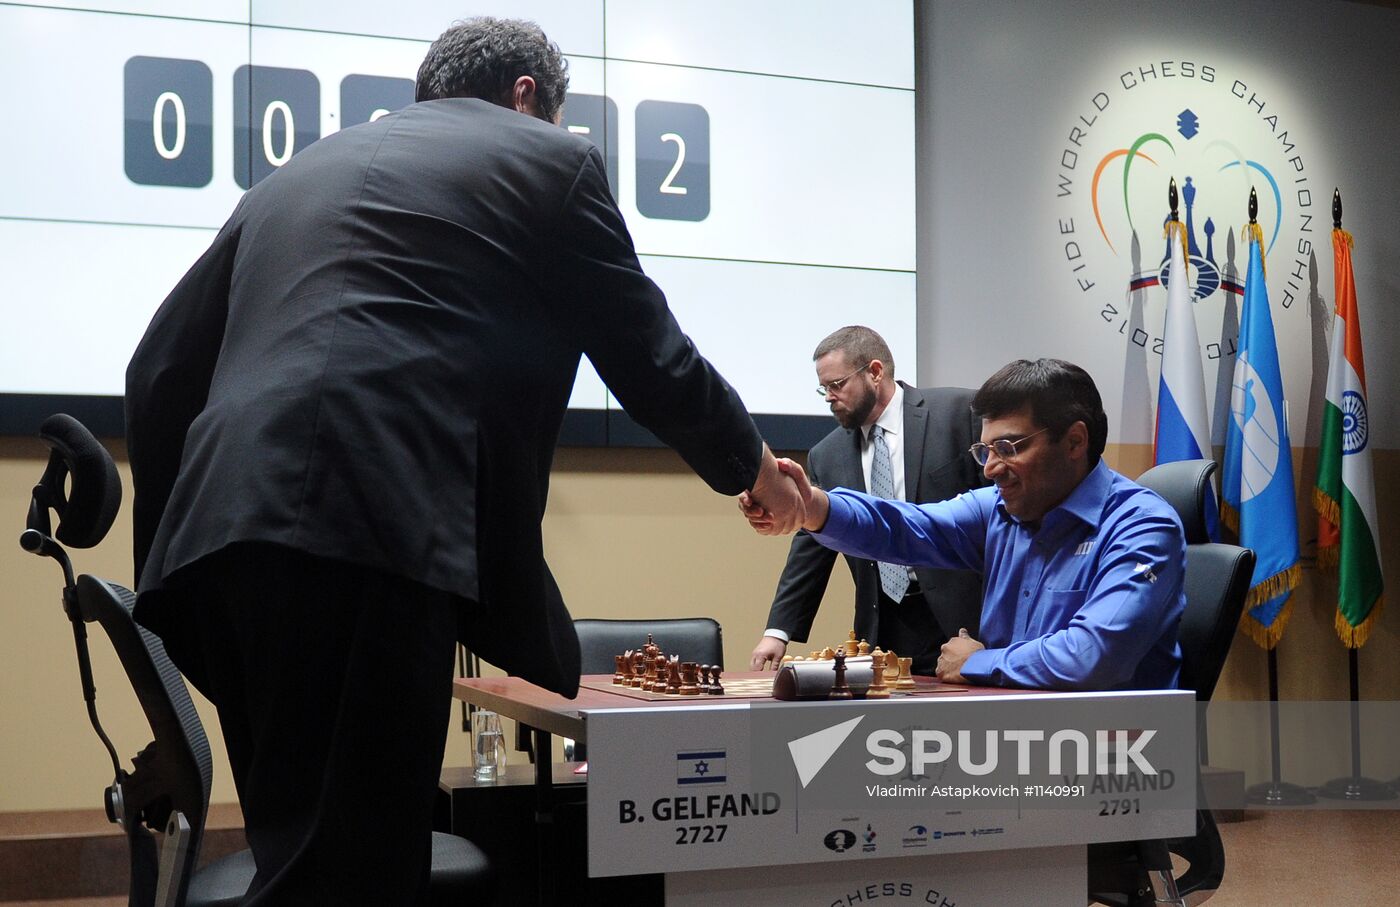 World Chess Champion title match. Tie-break